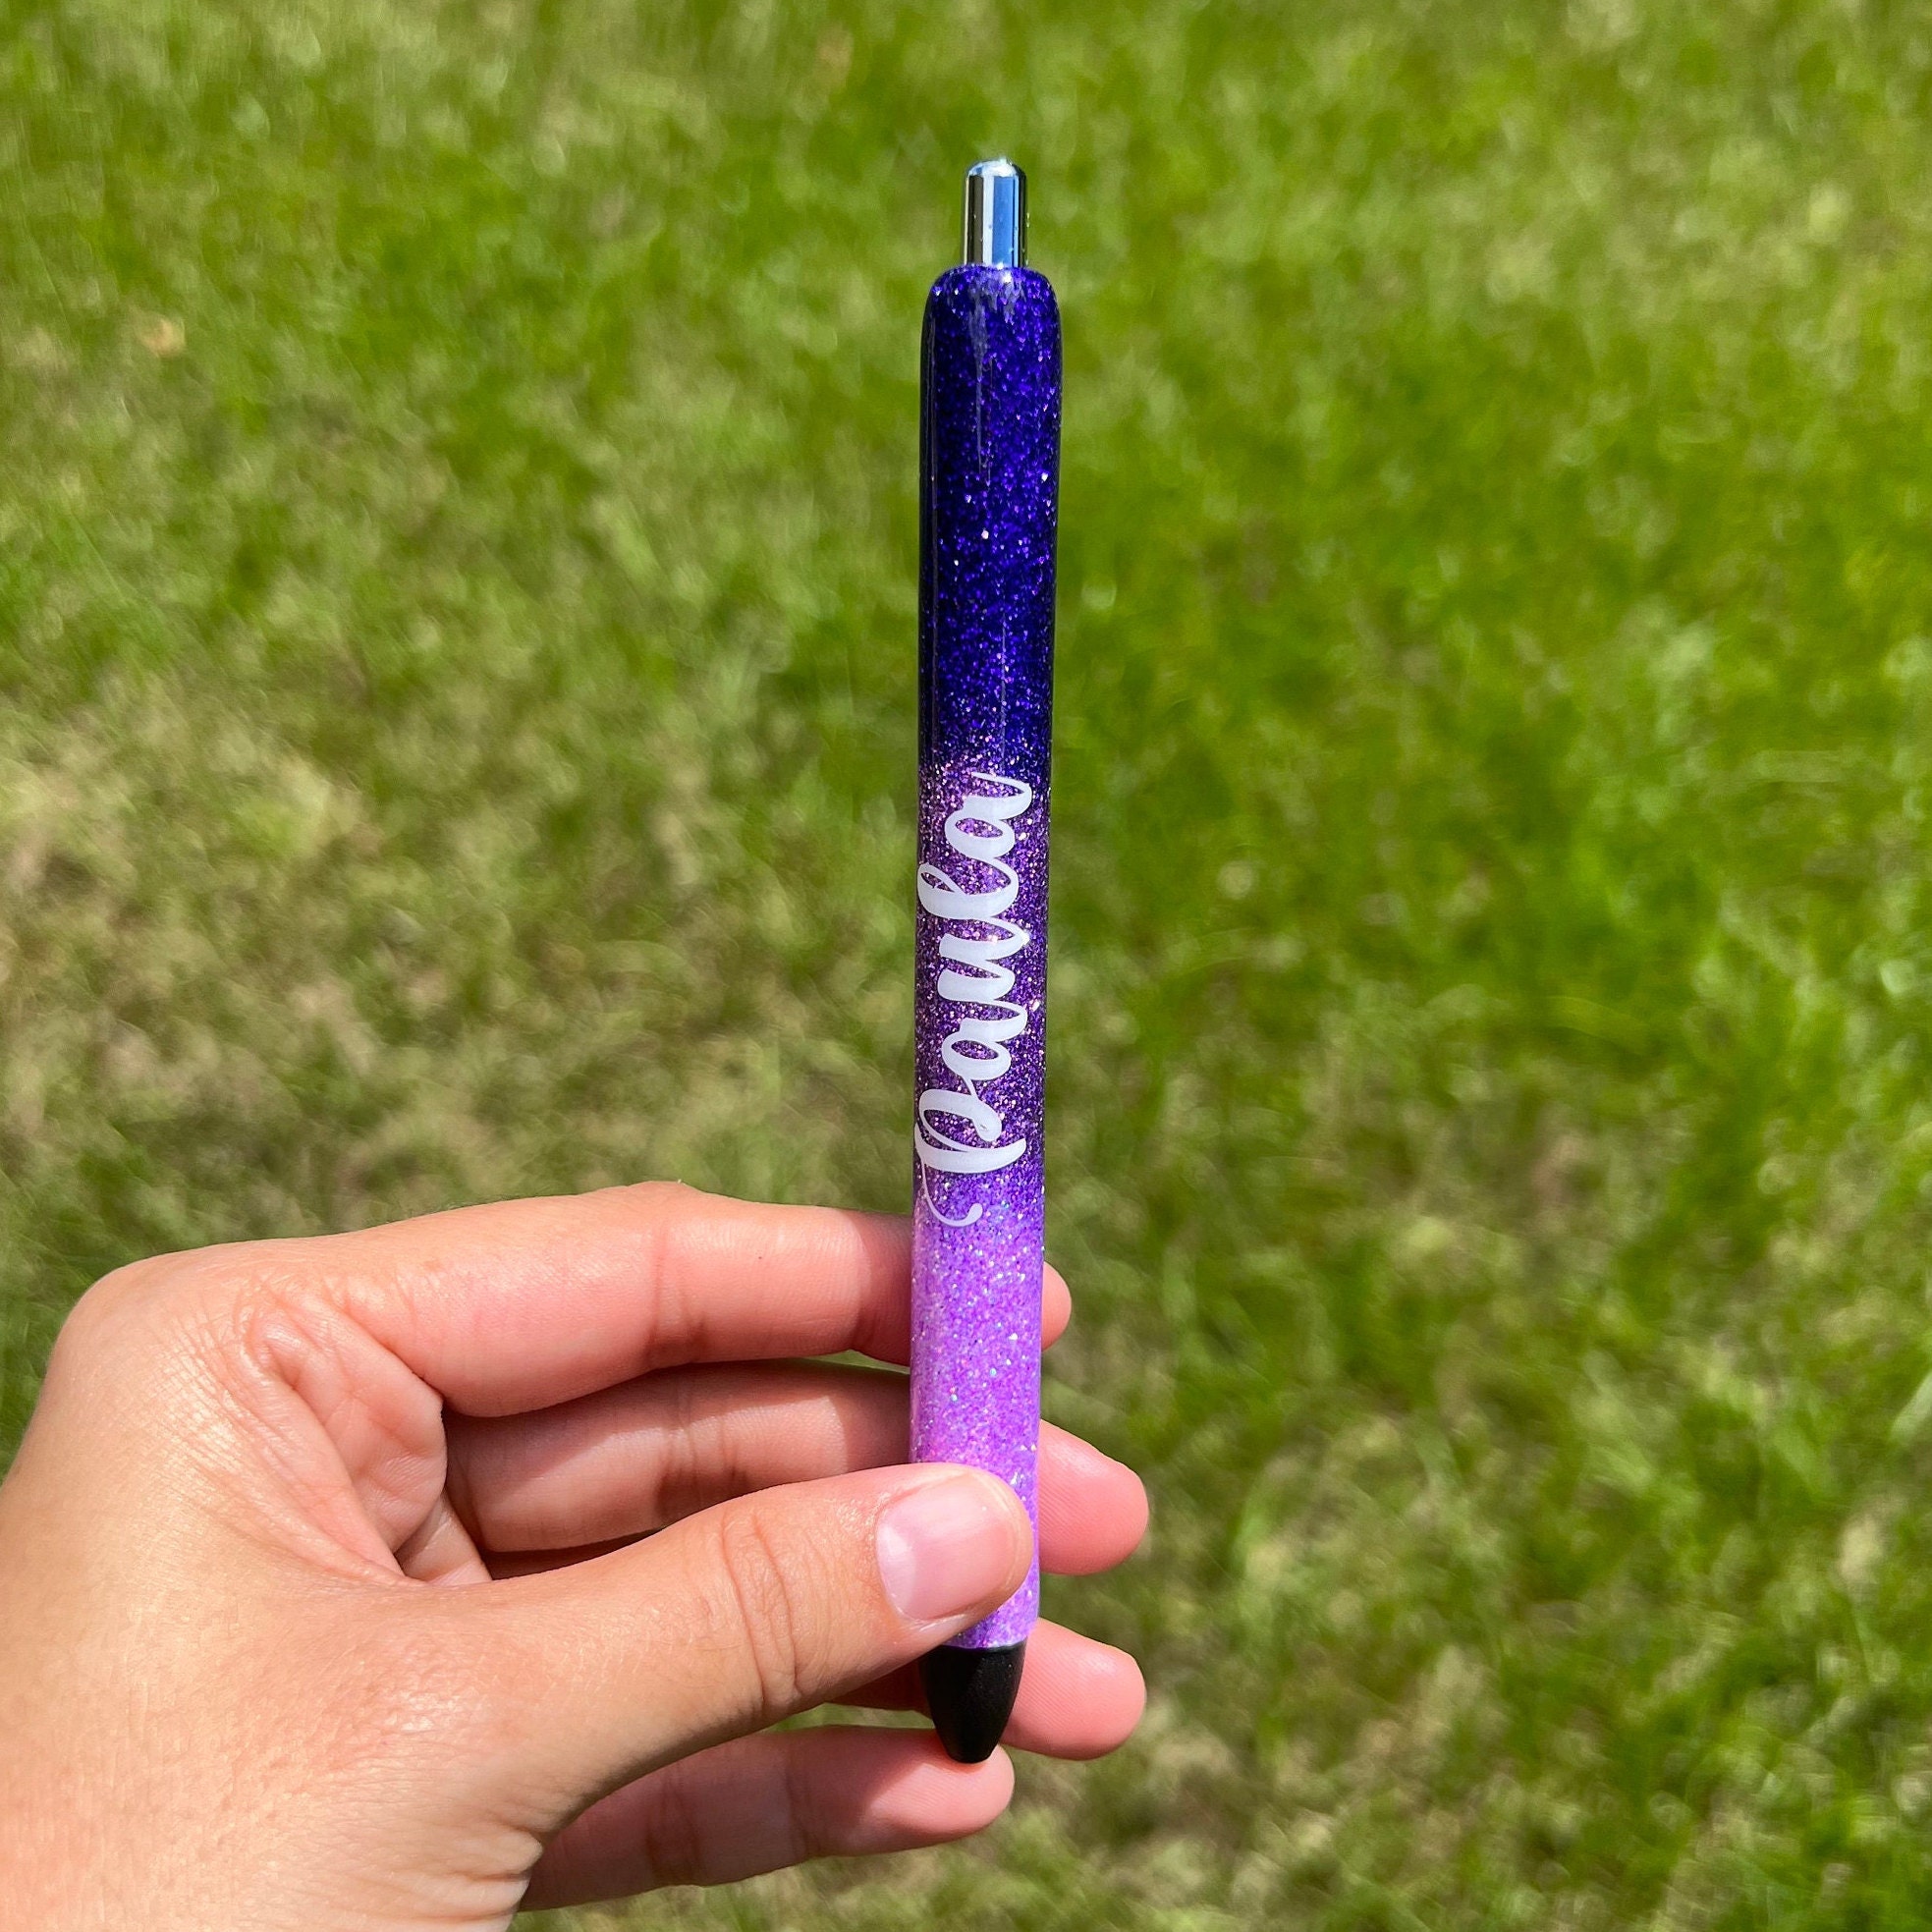 Ombre Glitter Pens – Winnies Wonders Creations